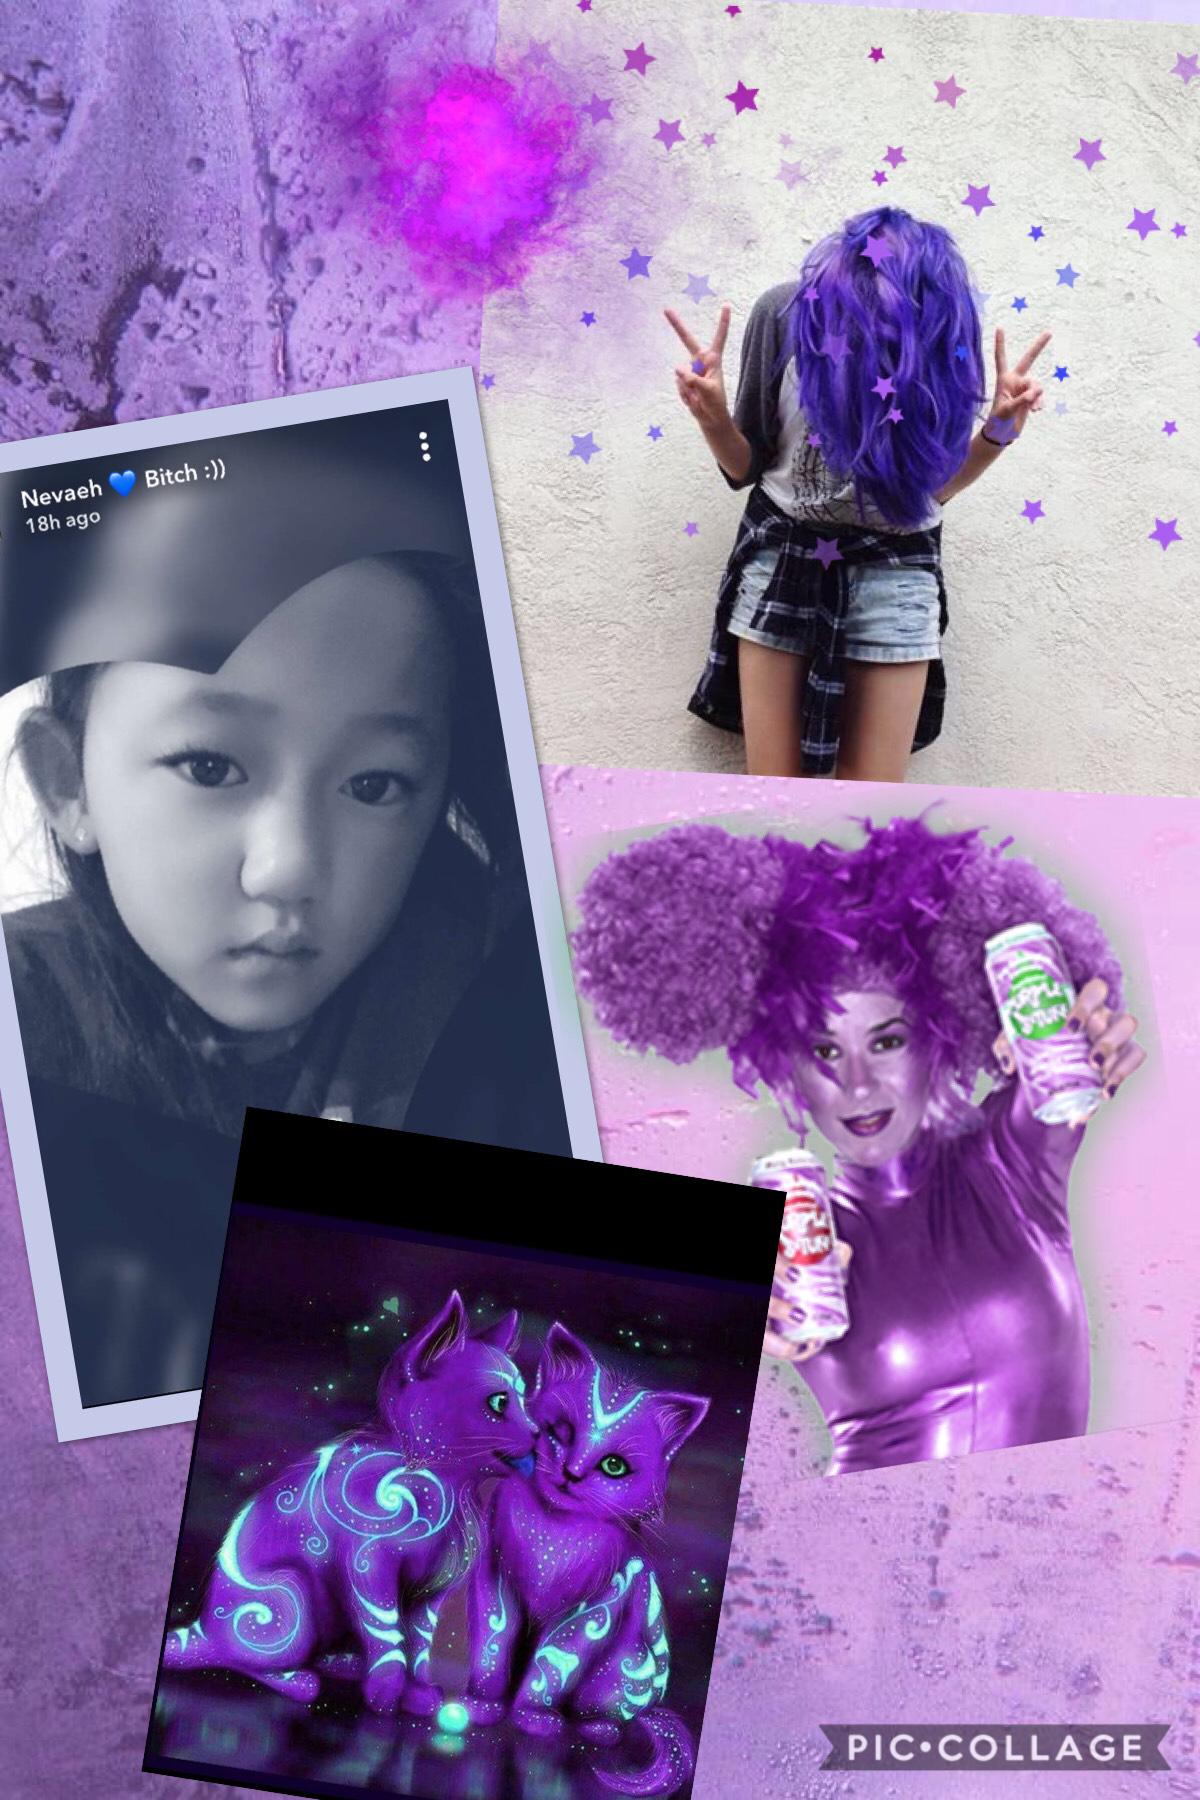 I just love purple